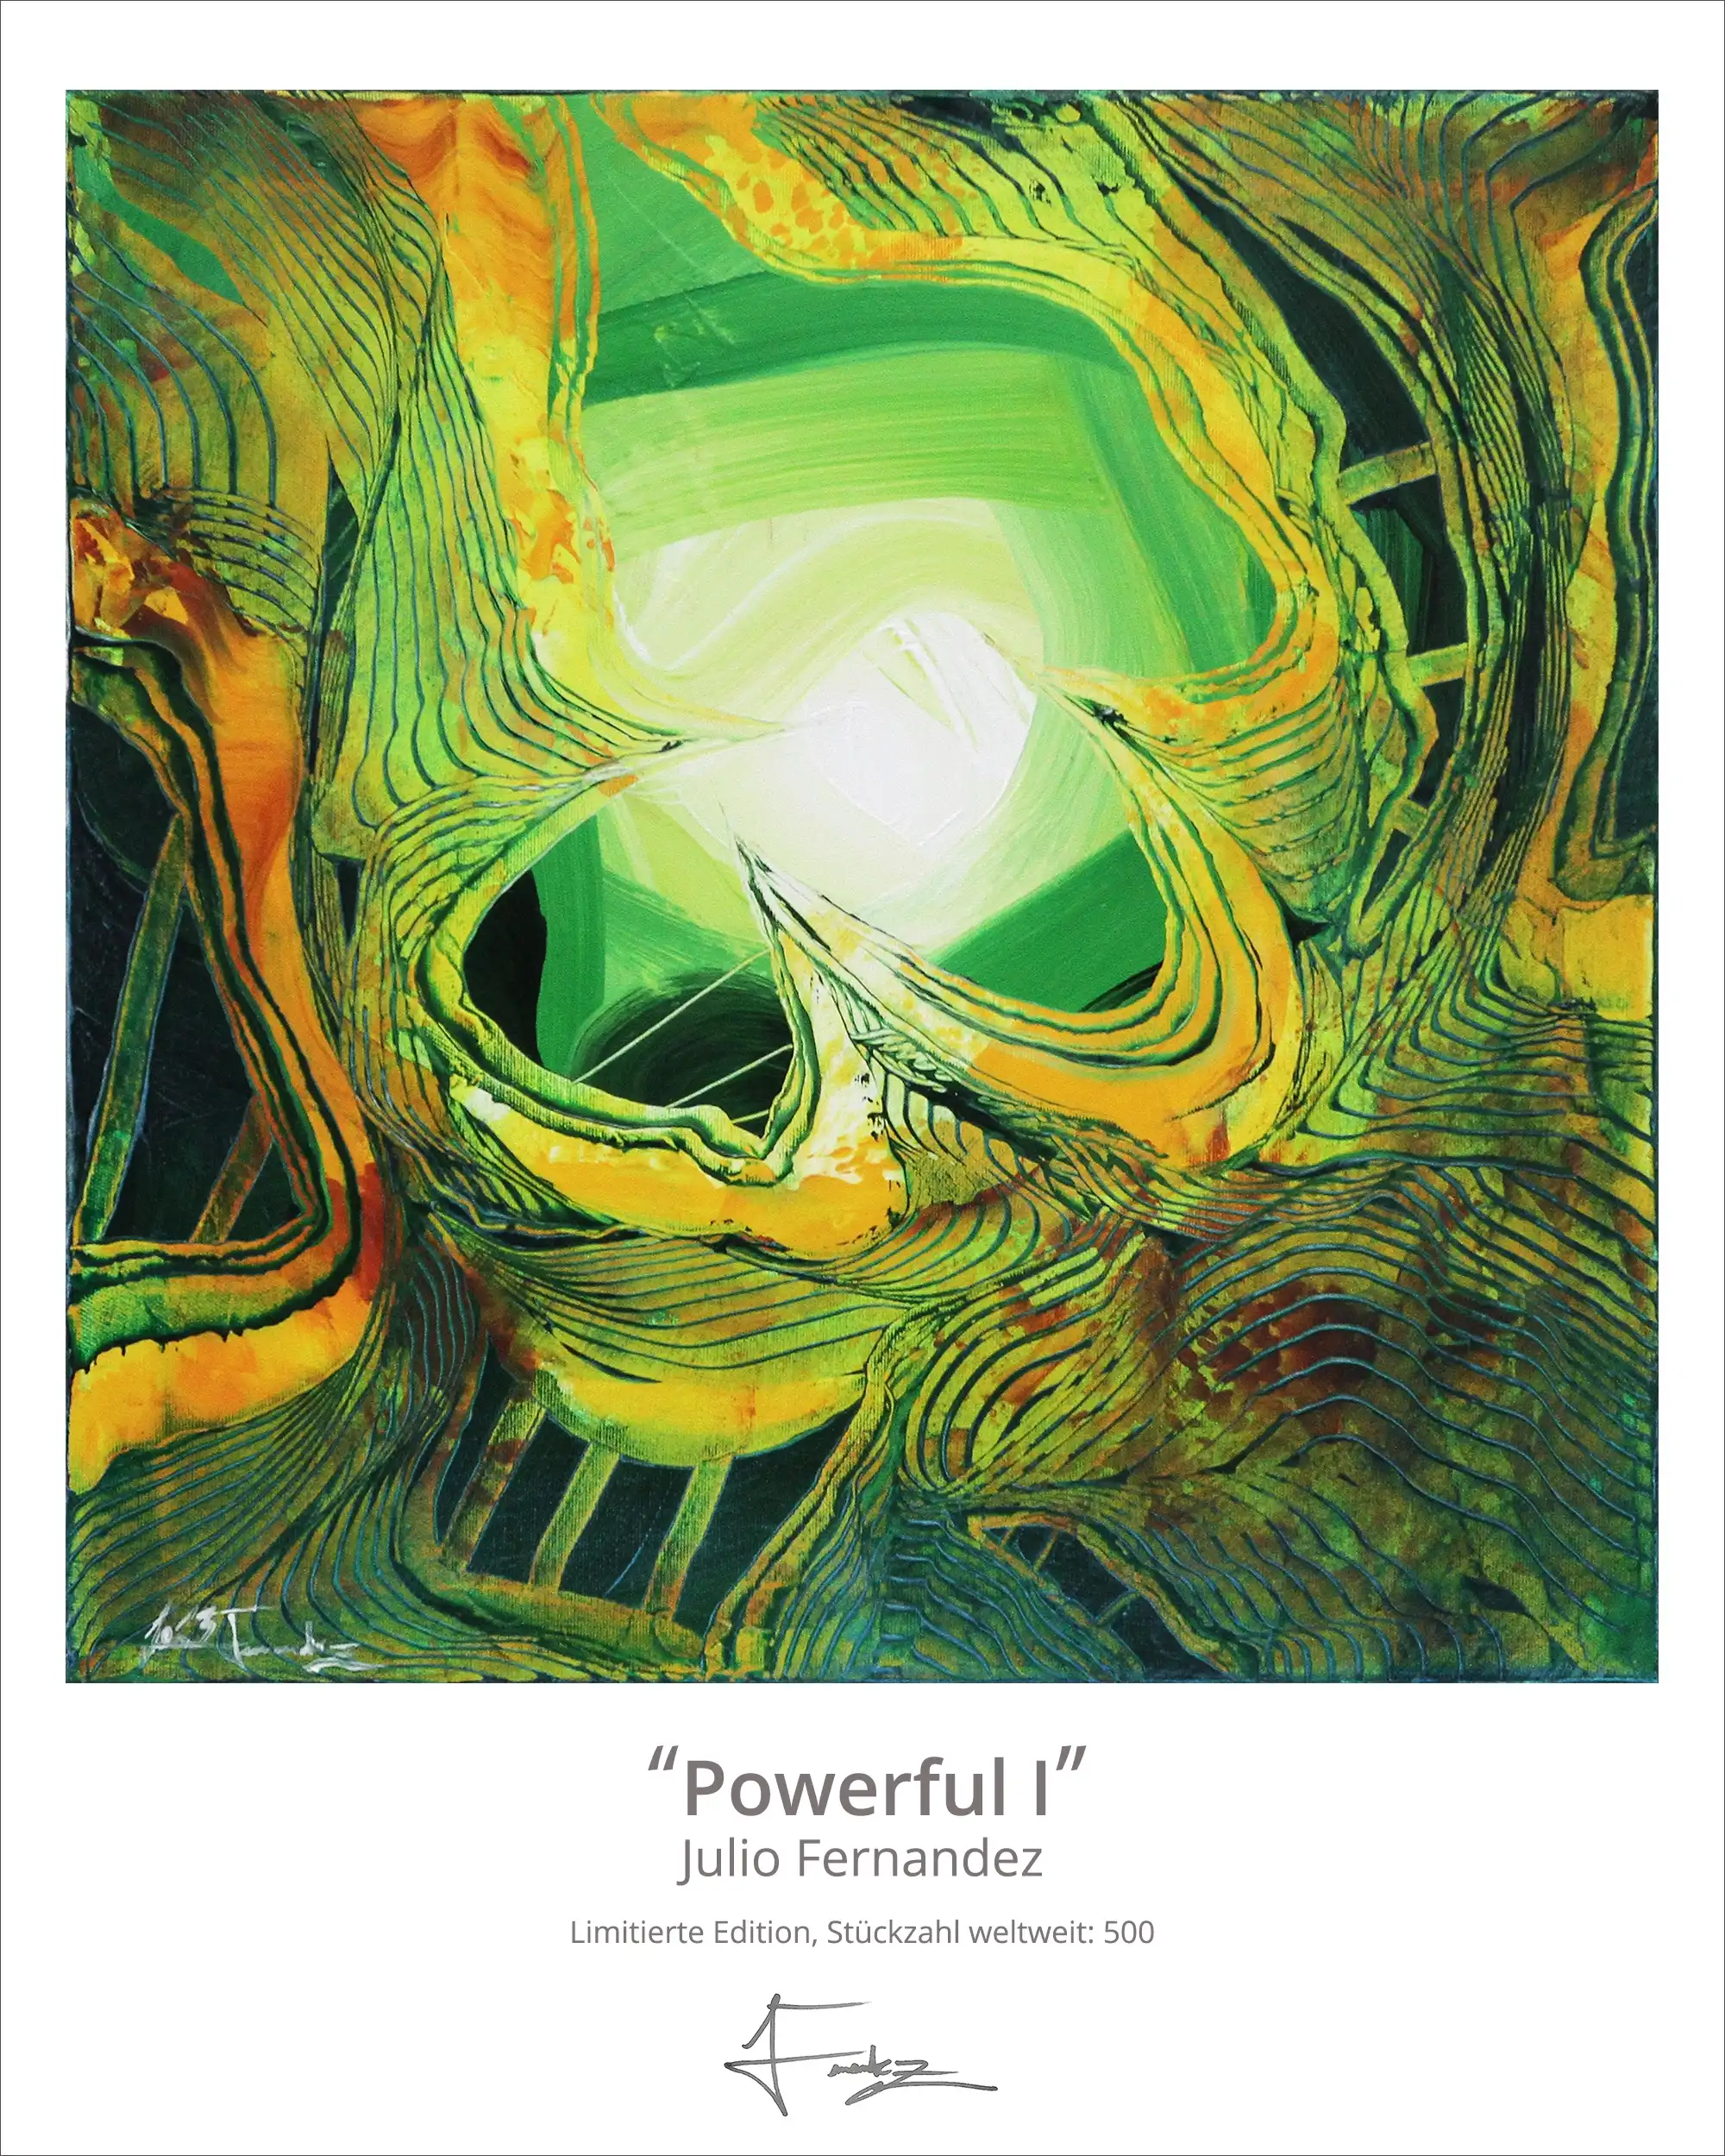 Limitierte Edition auf Papier, J. Fernandez "Powerful I", Fineartprint, Kollektion E&K